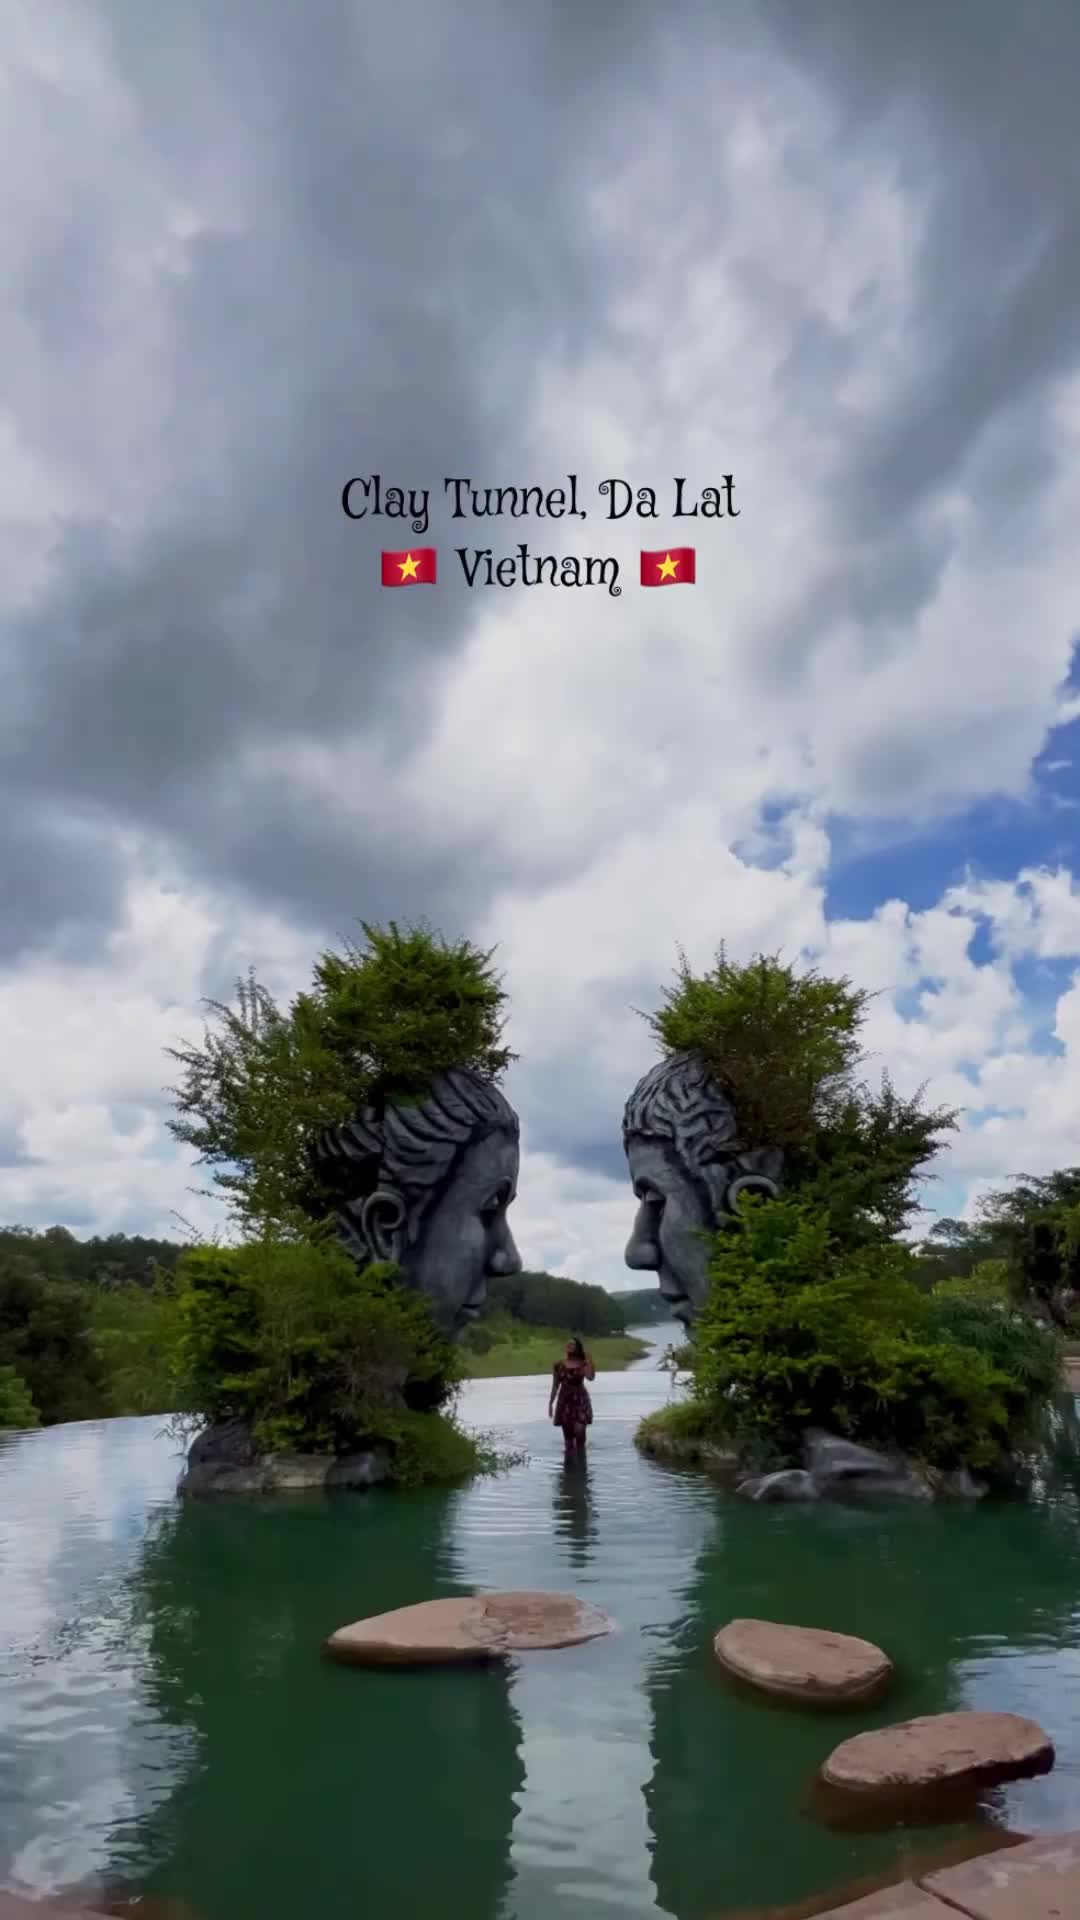 Discover the Clay Tunnel in Da Lat, Vietnam